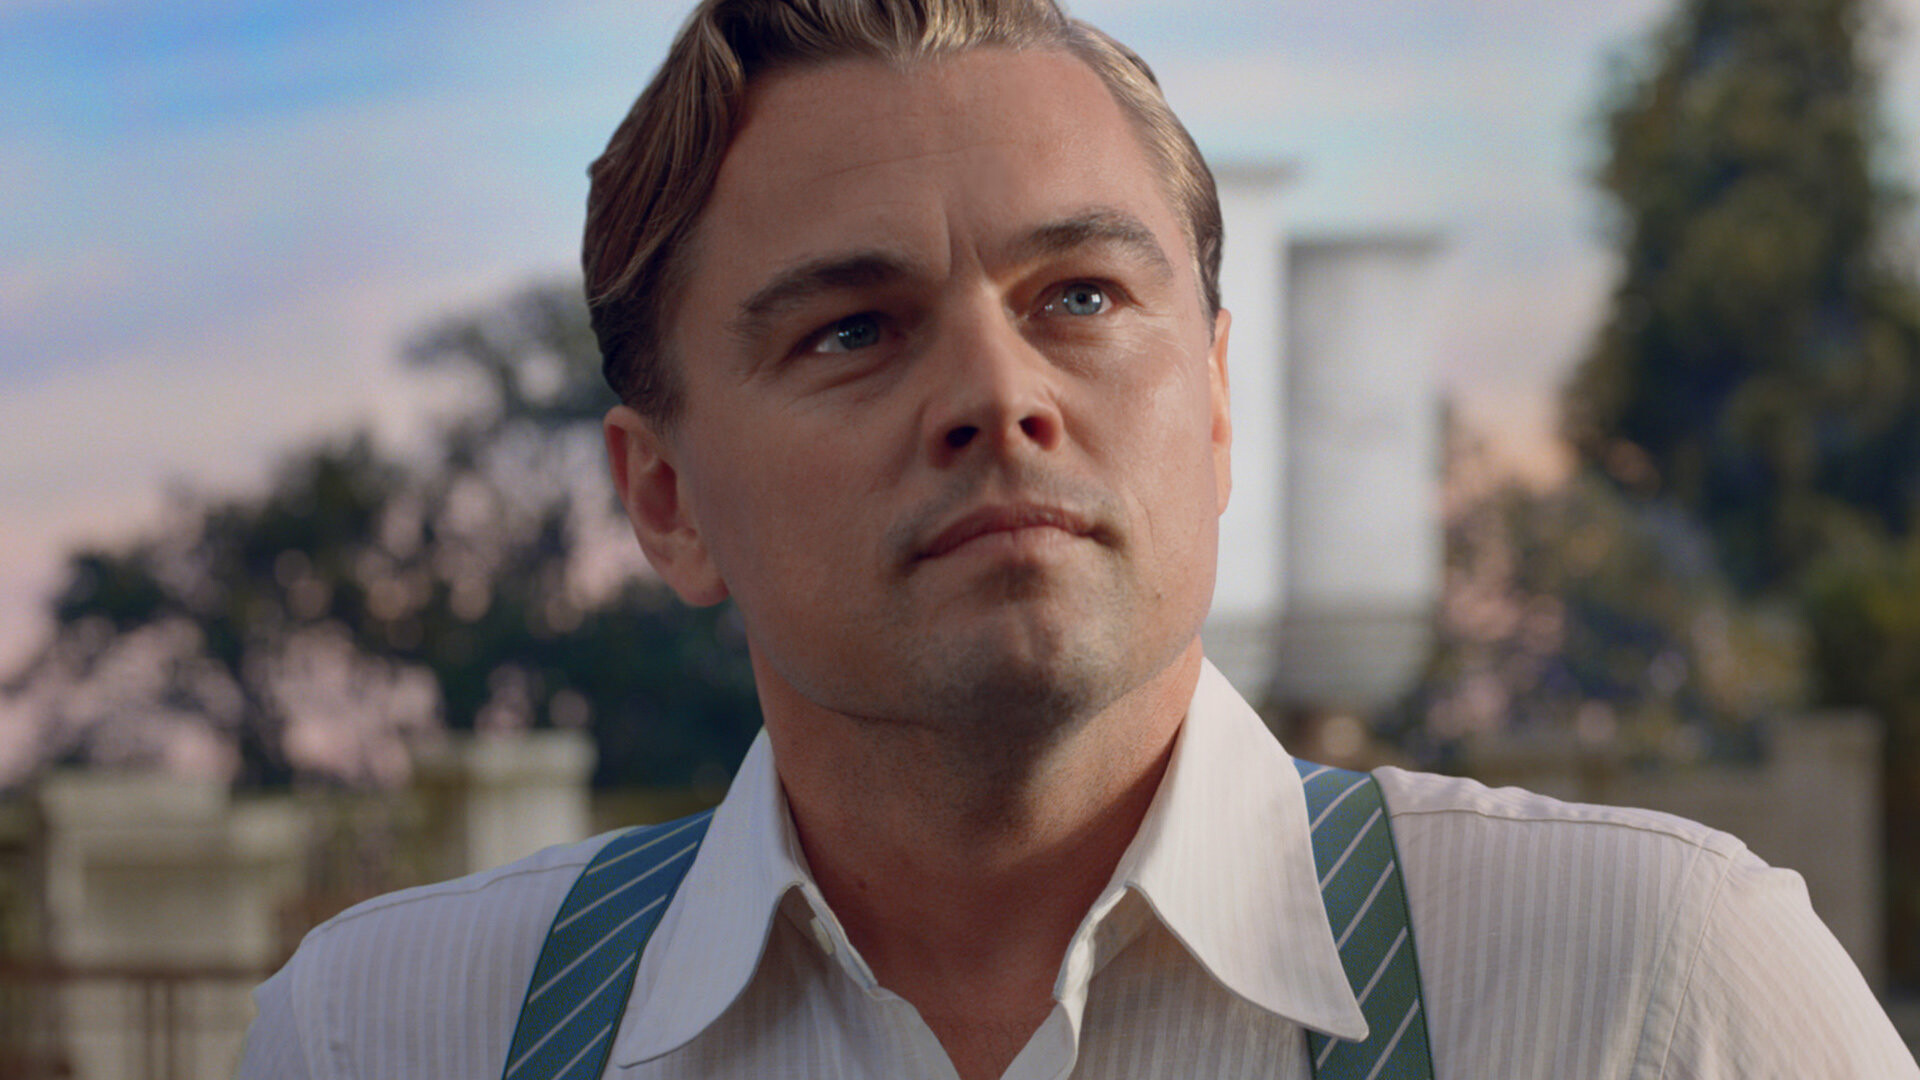 Leonardo DiCaprio, Full HD wallpapers, Acclaimed actor, Hollywood superstar, 1920x1080 Full HD Desktop